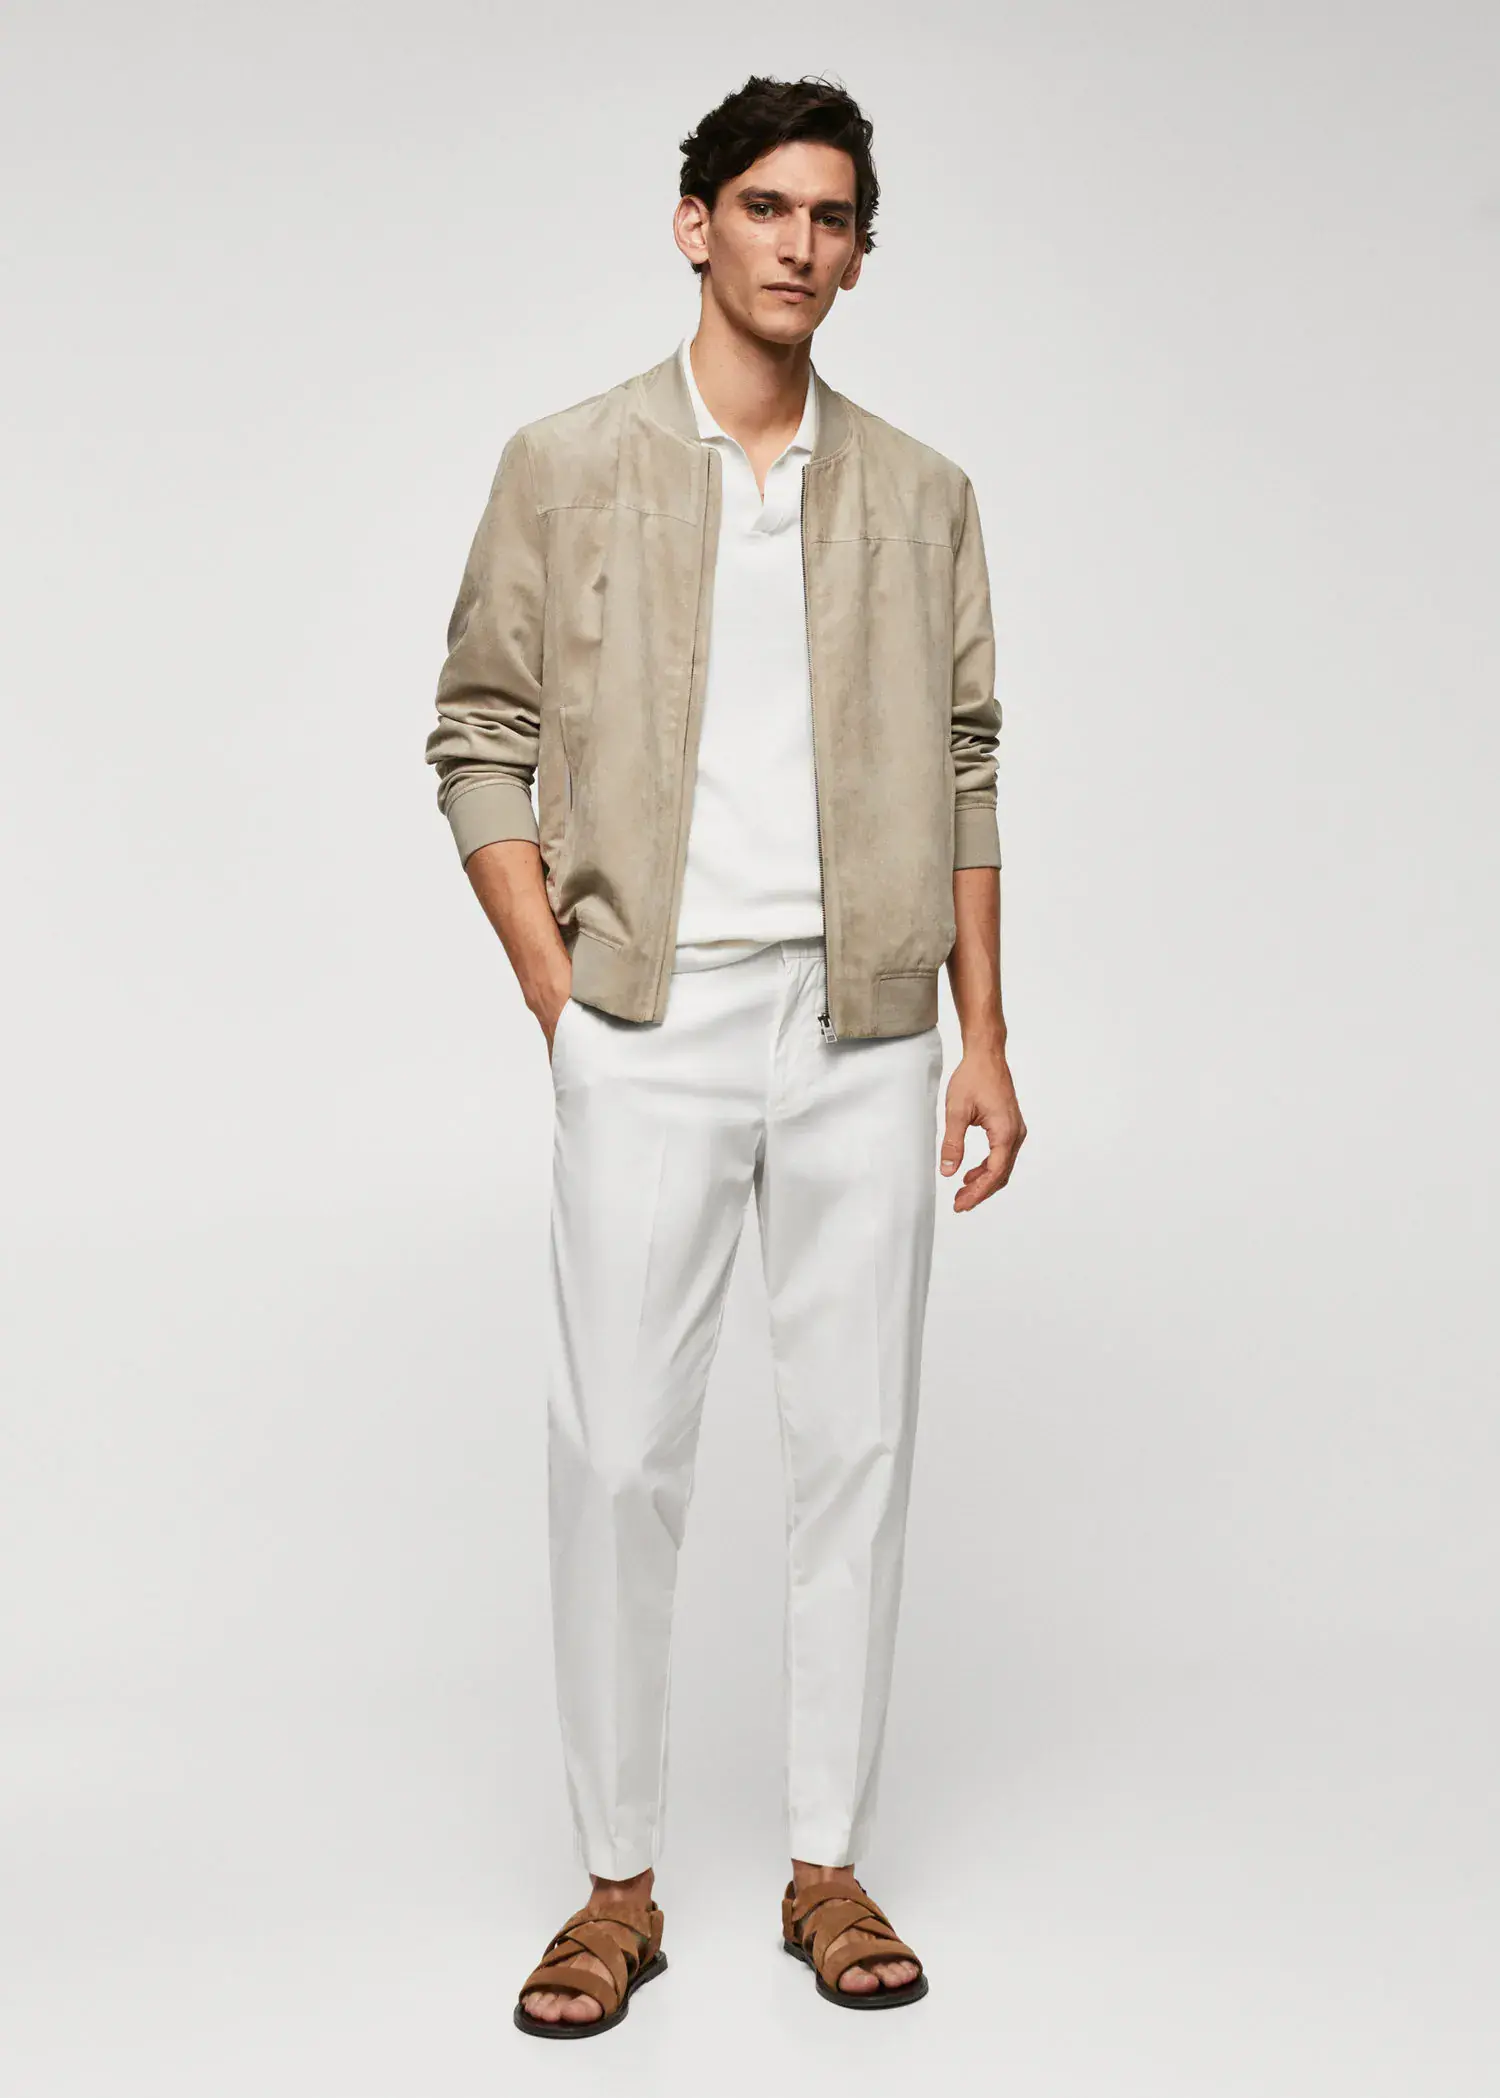 Mango Slim-fit cotton pants. a man in a tan jacket and white pants. 